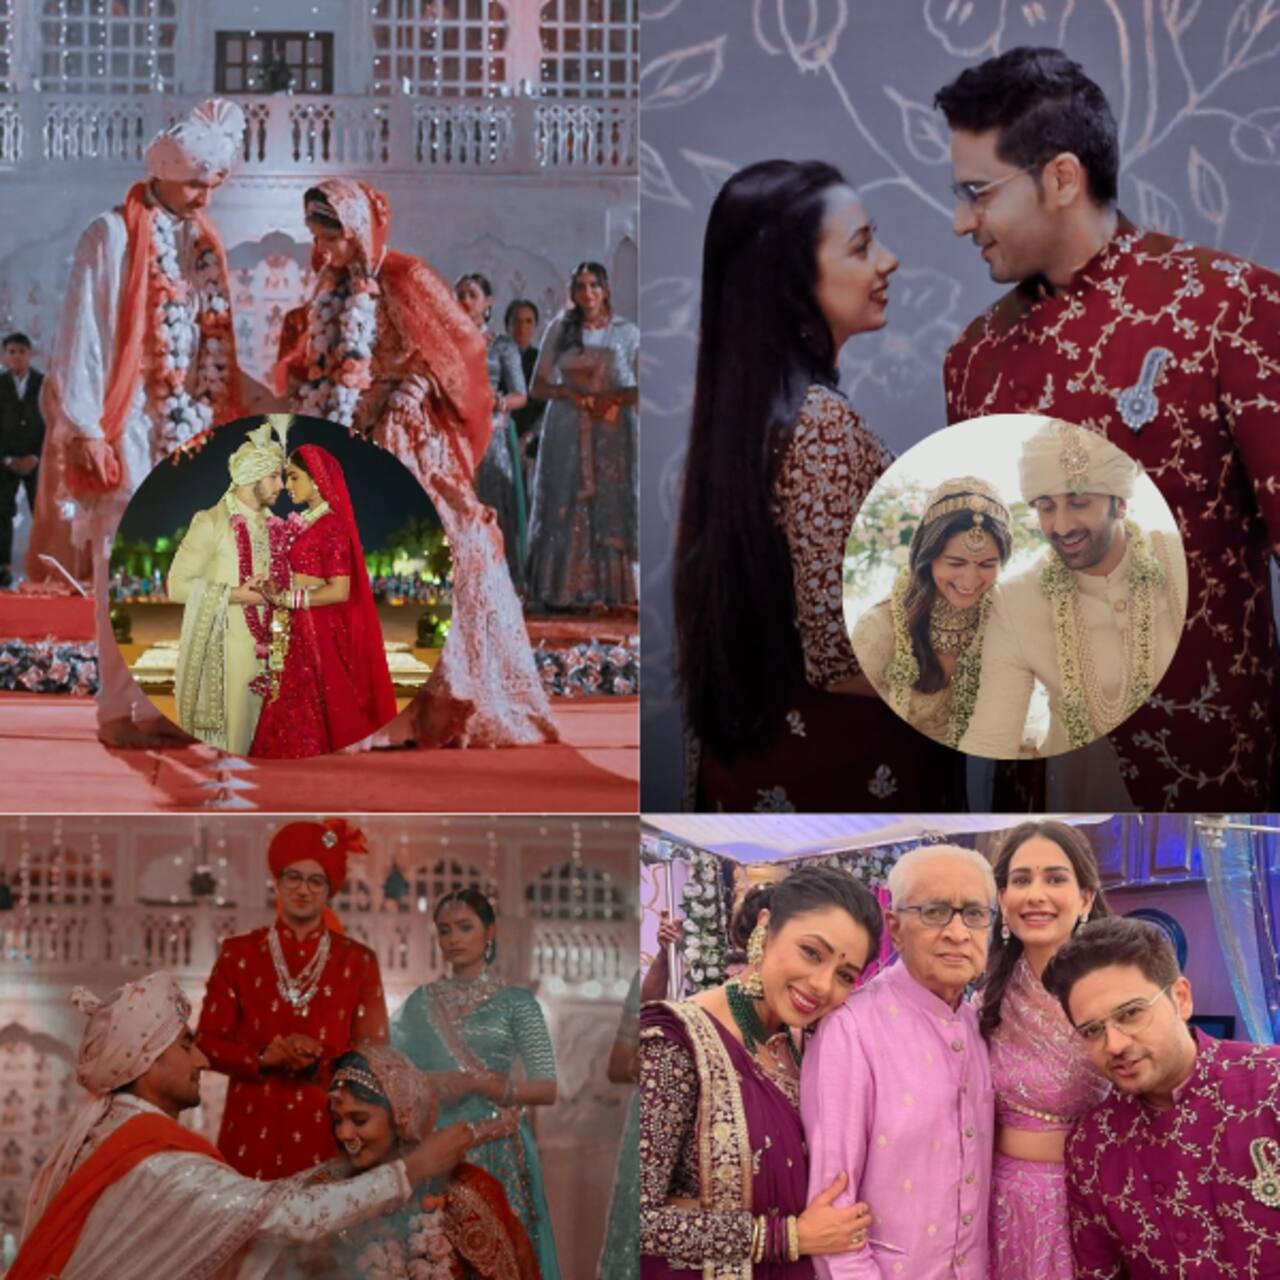 Yeh Rishta Kya Kehlata Hai-AbhiRa Ki Shaadi and Anupamaa-MaAn Ki Shaadi inspired by Priyanka-Nick, and Ranbir-Alia weddings?